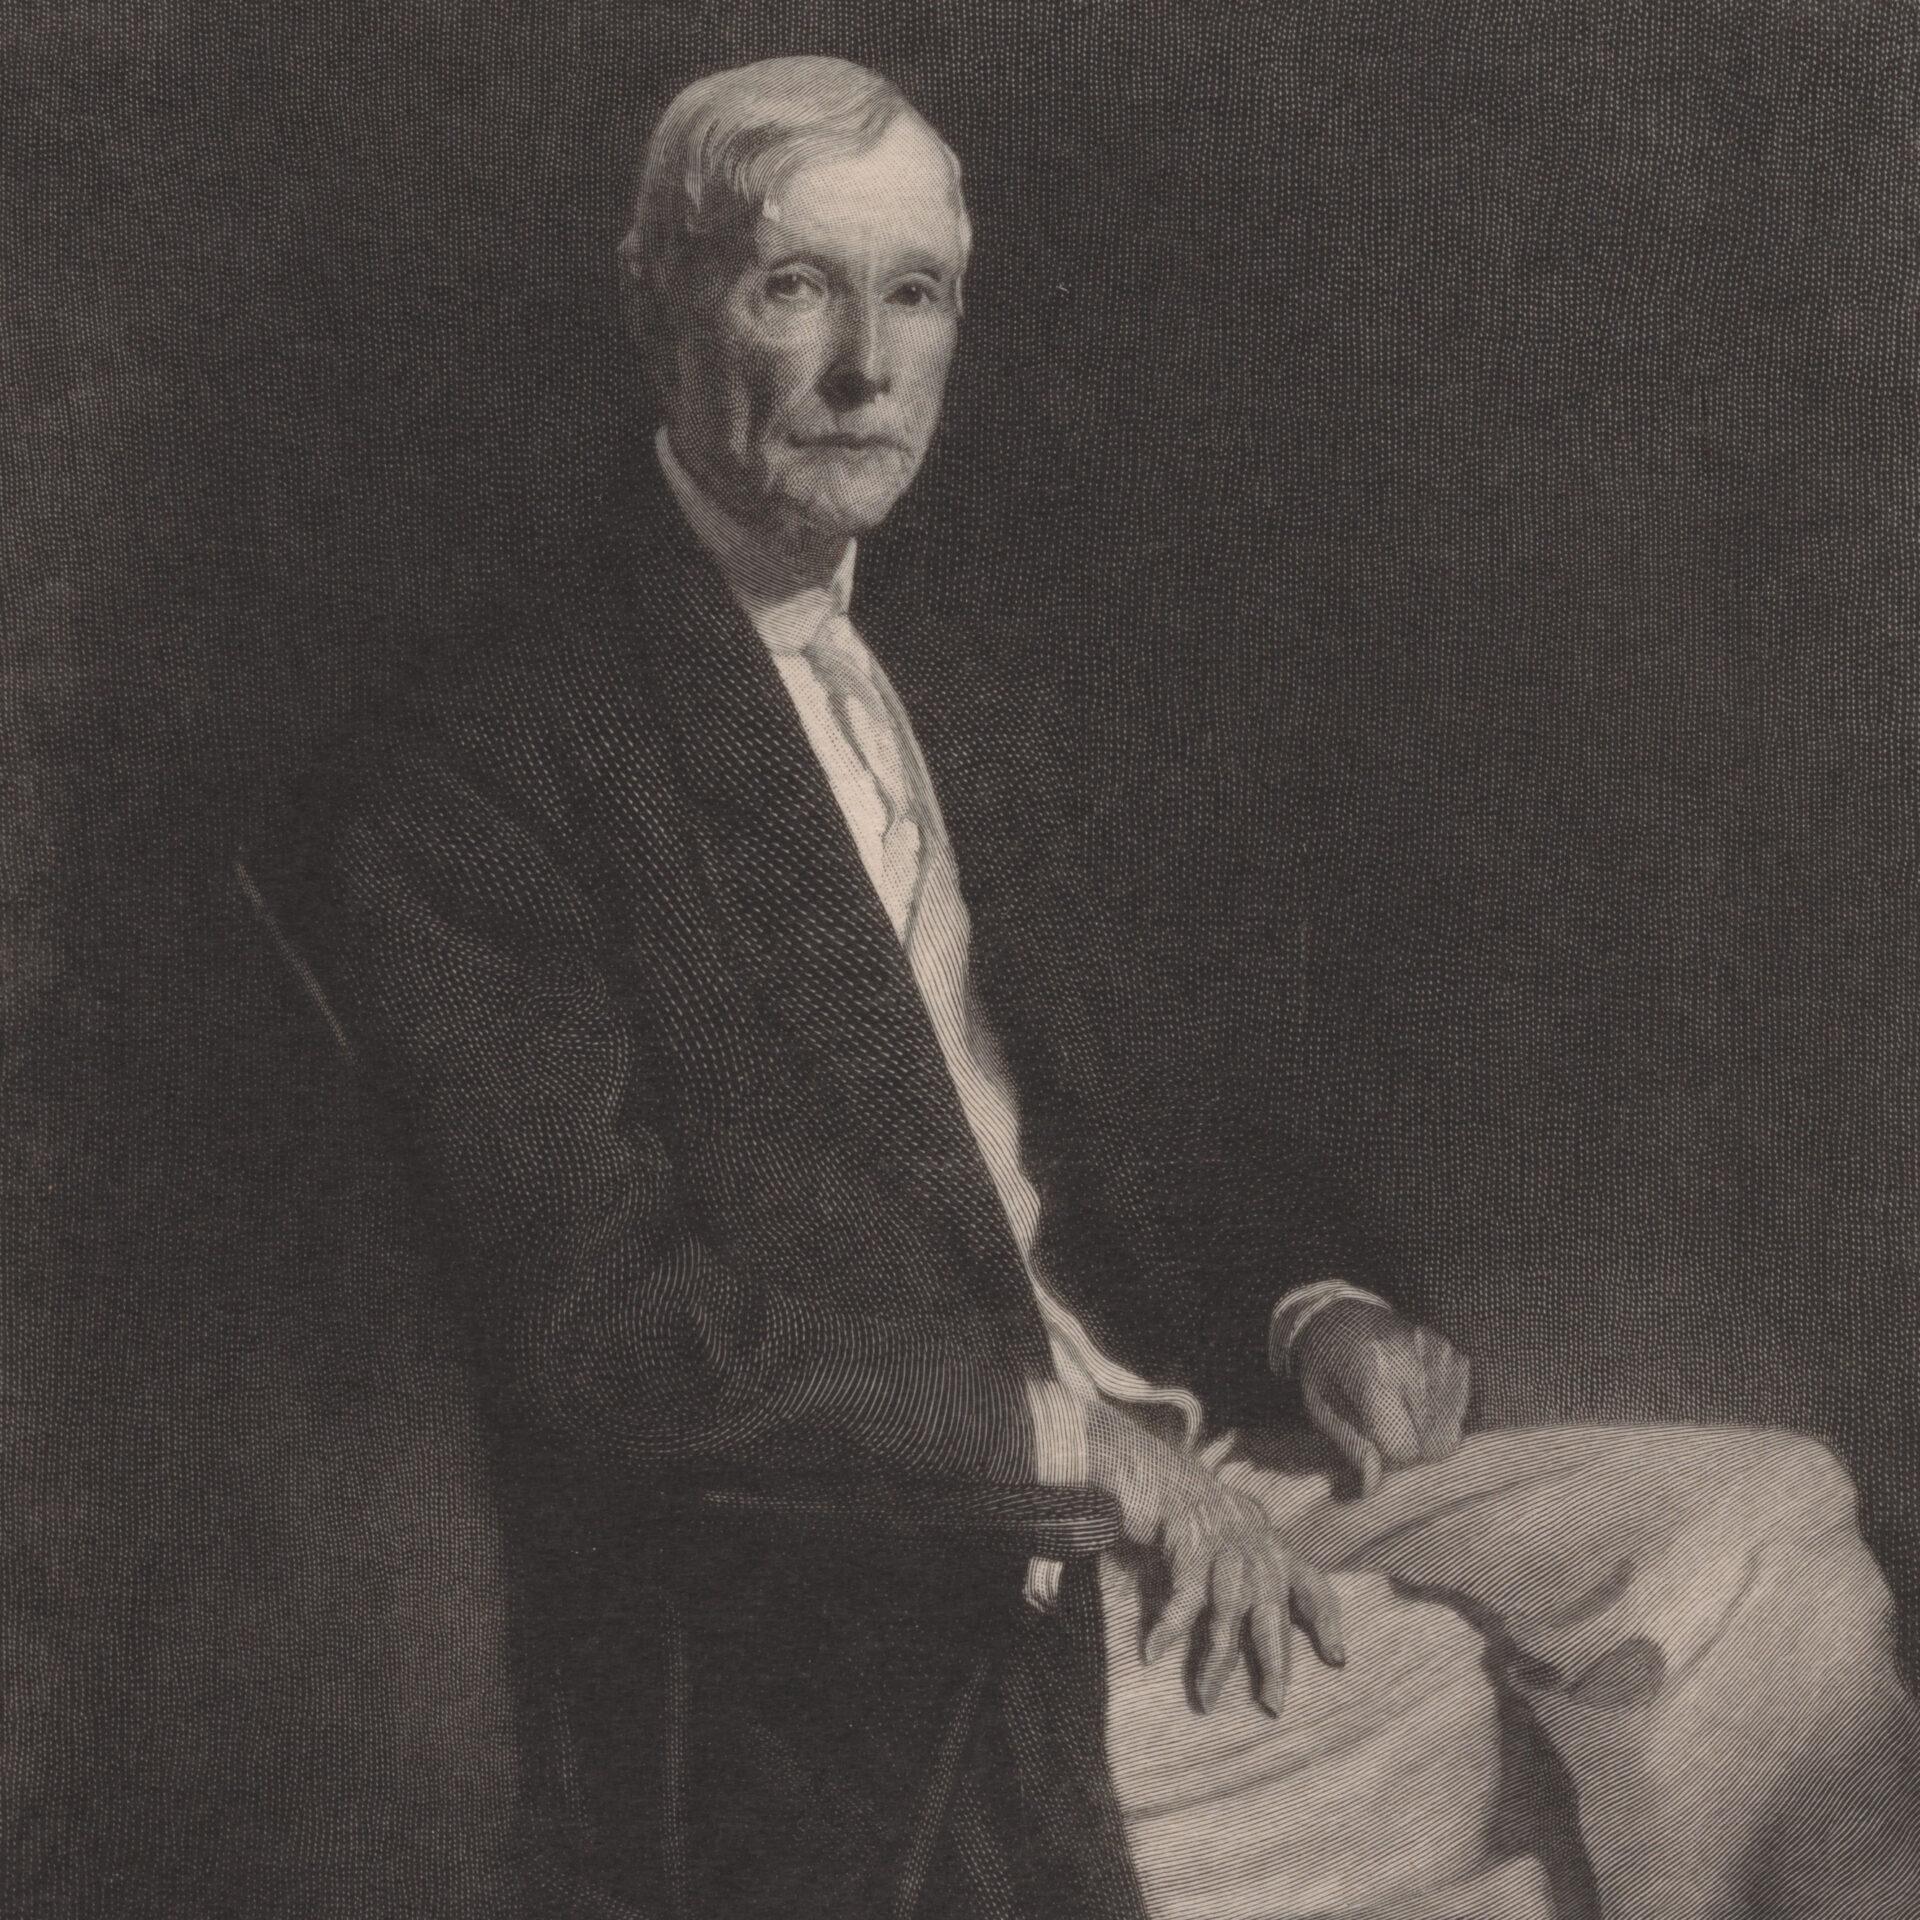 Photograph, Young John D. Rockefeller